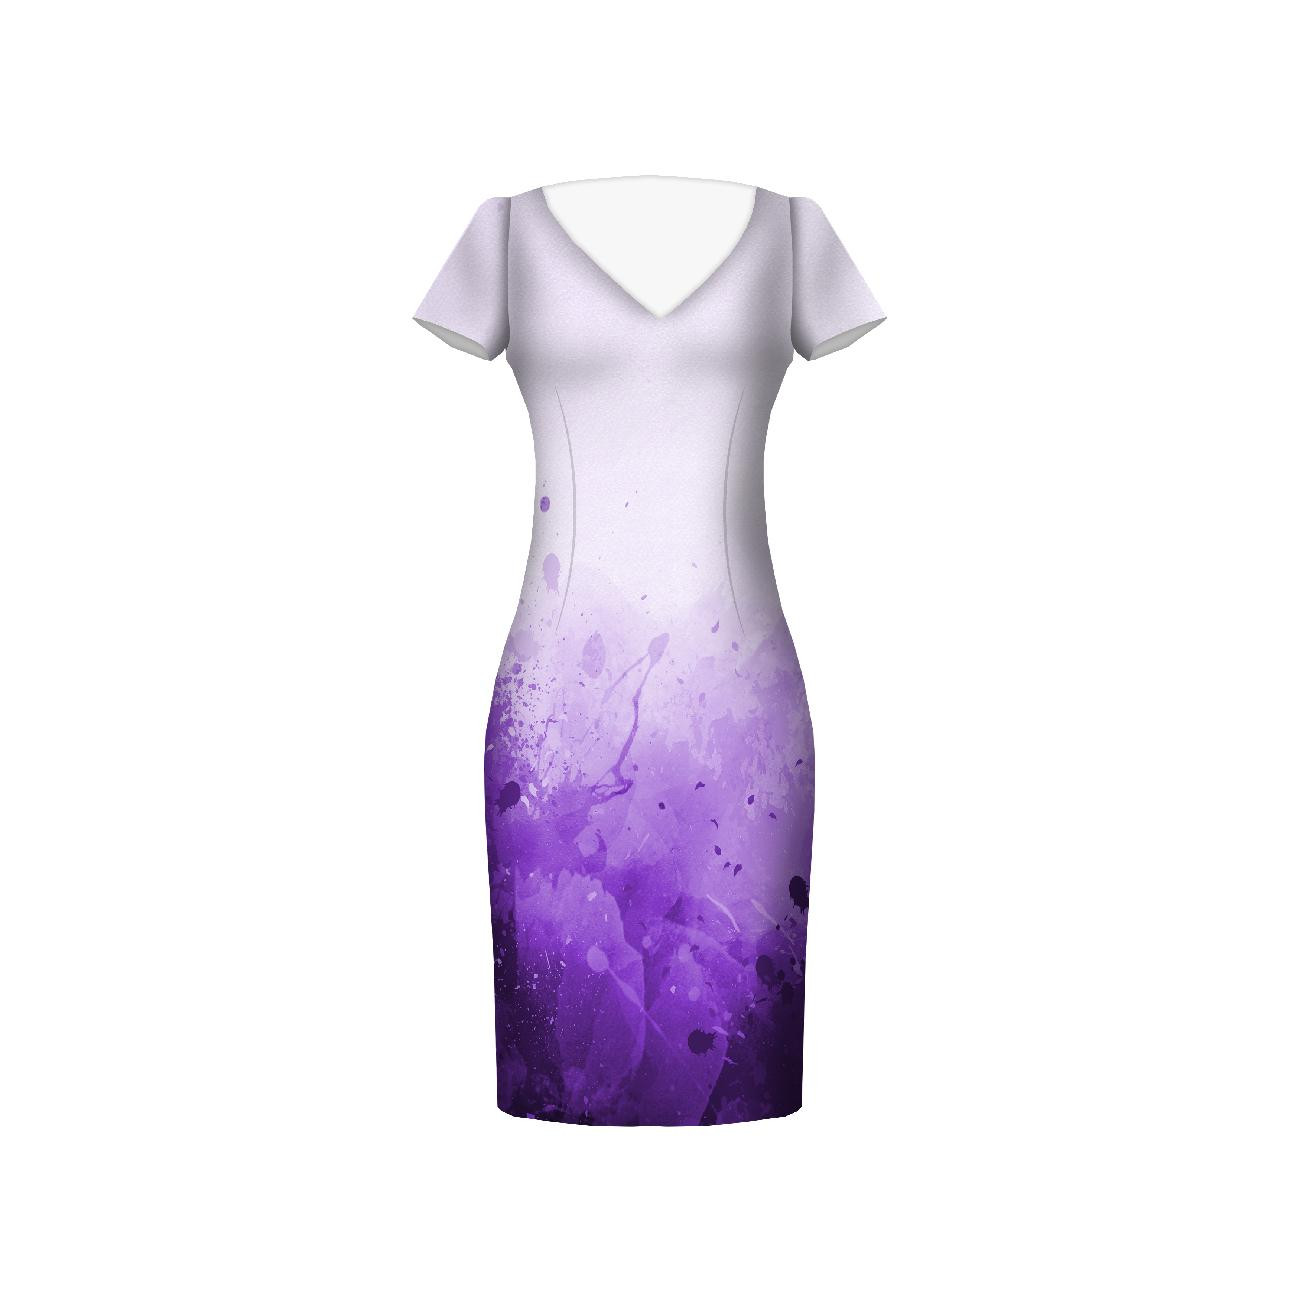 SPECKS (purple) - dress panel Linen 100%